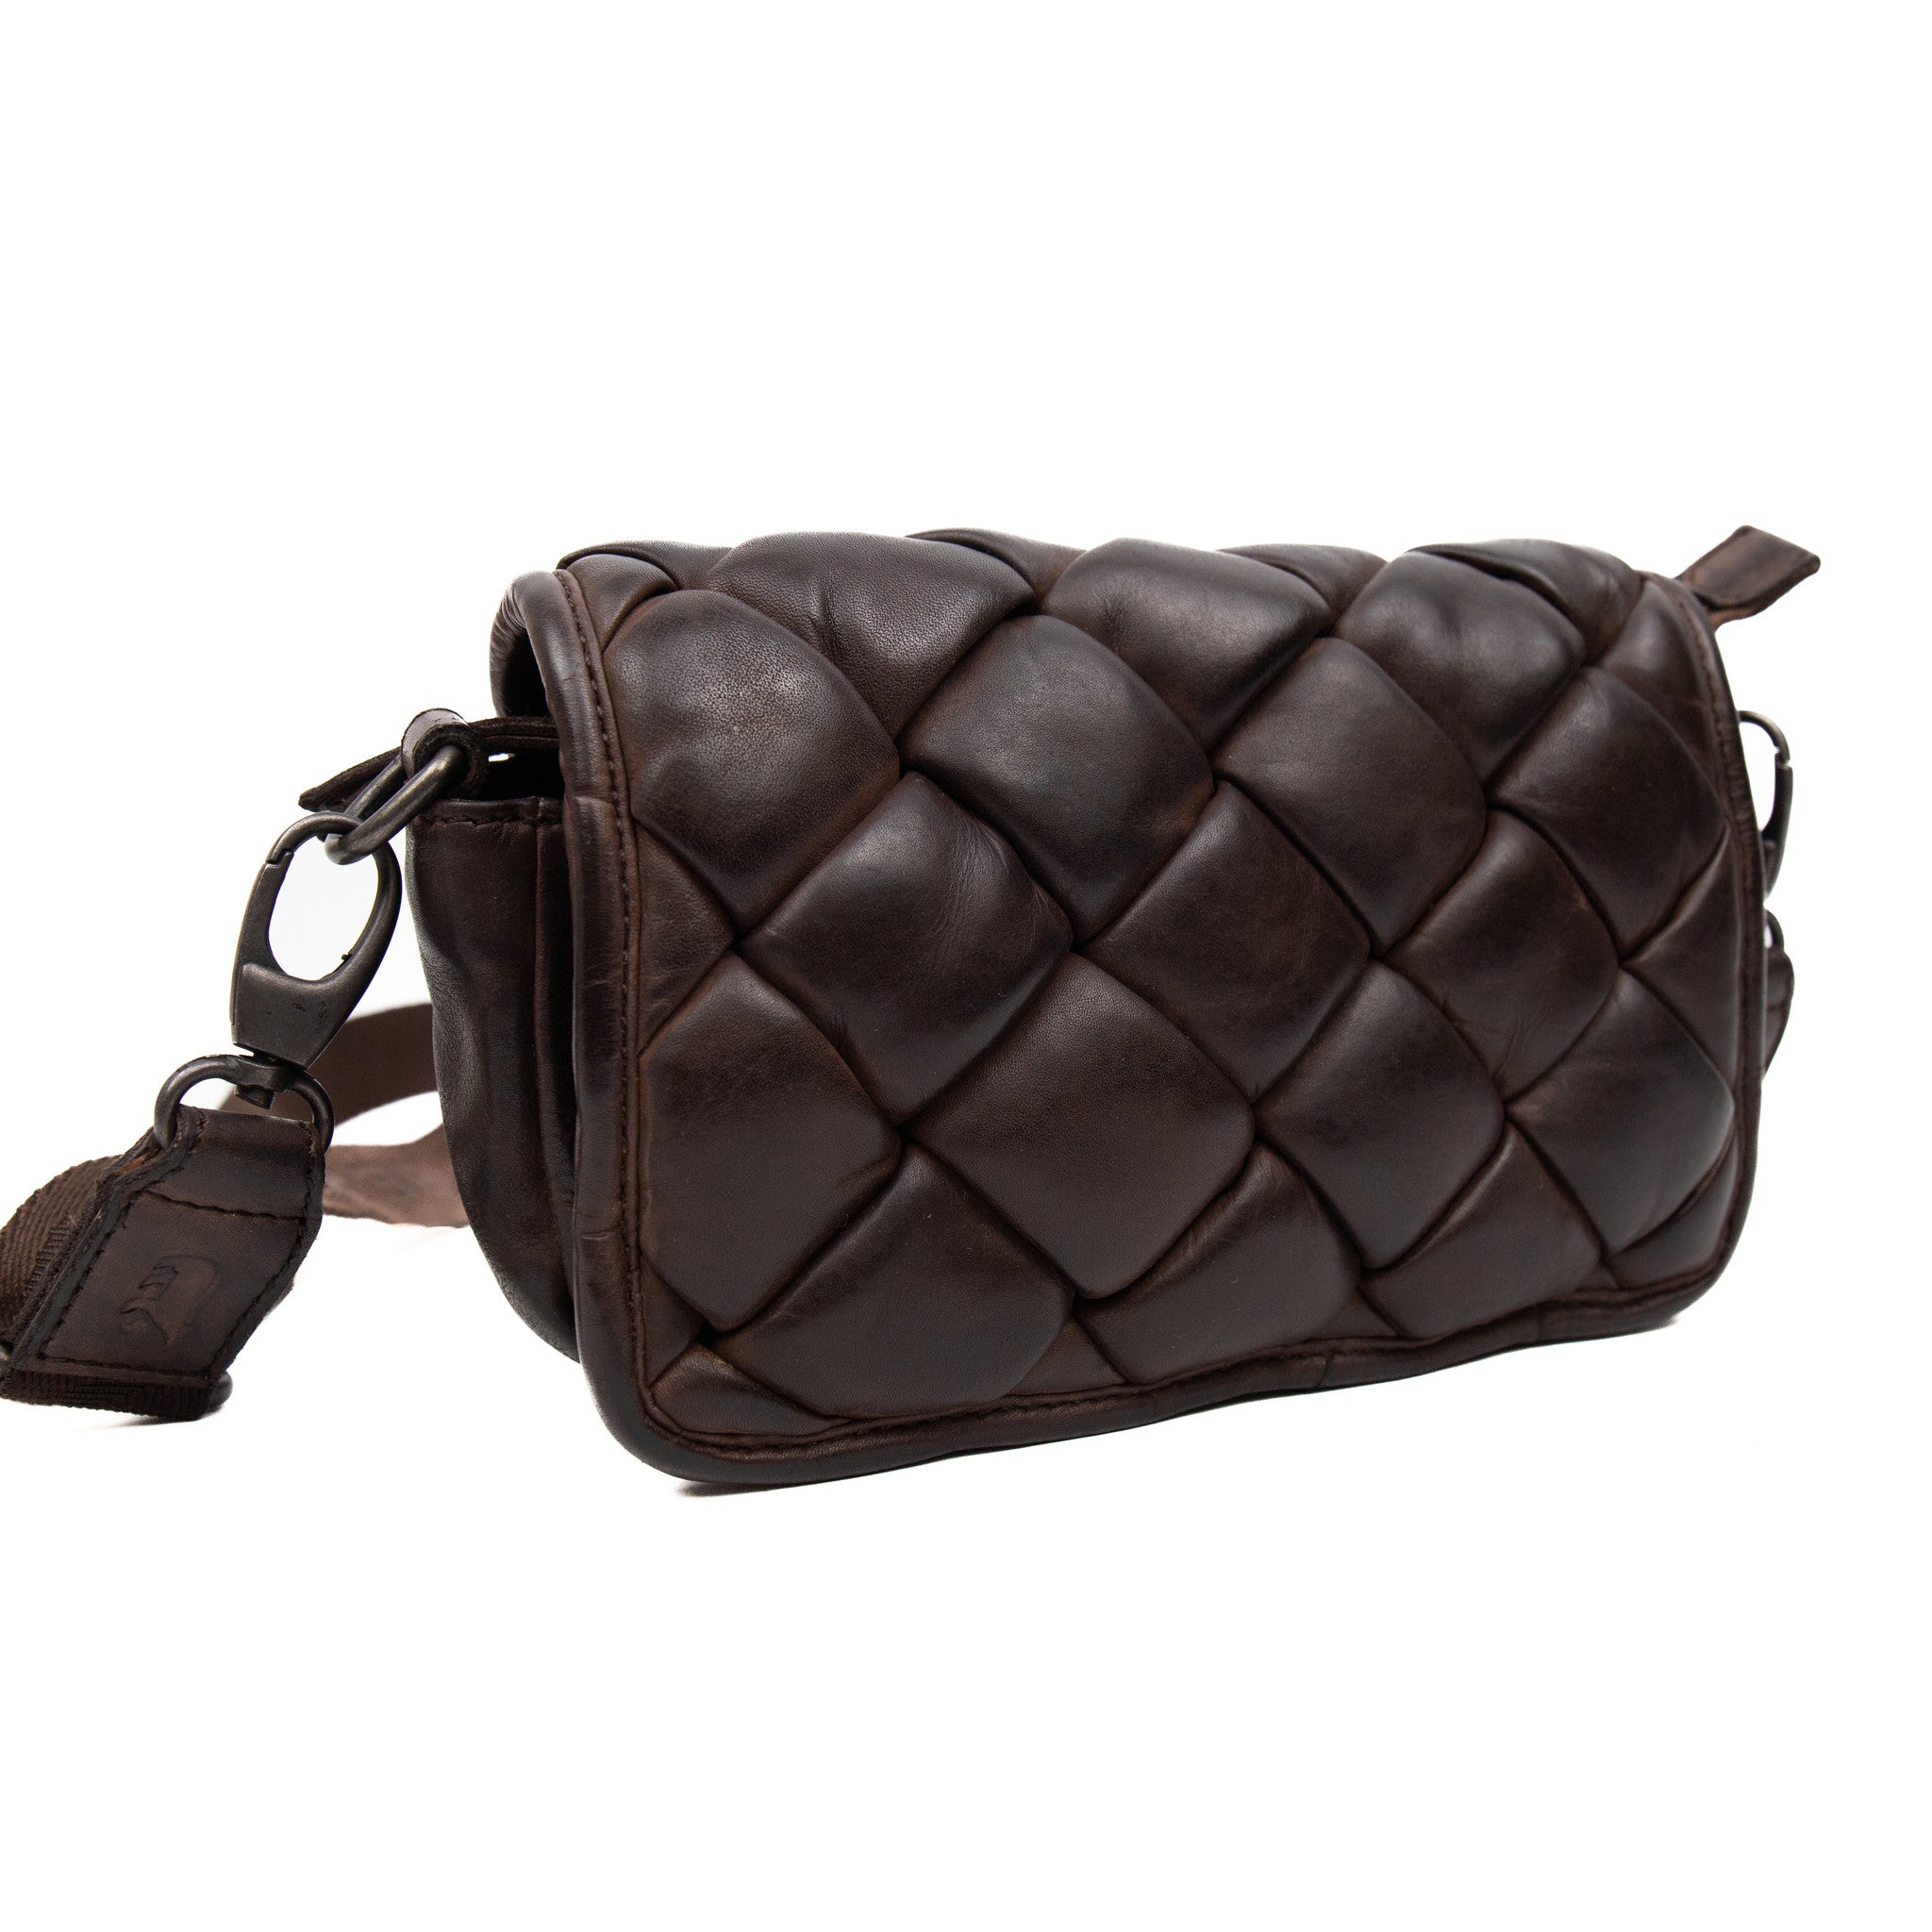 Braided shoulder bag 'Nola' dark brown - CL 42889